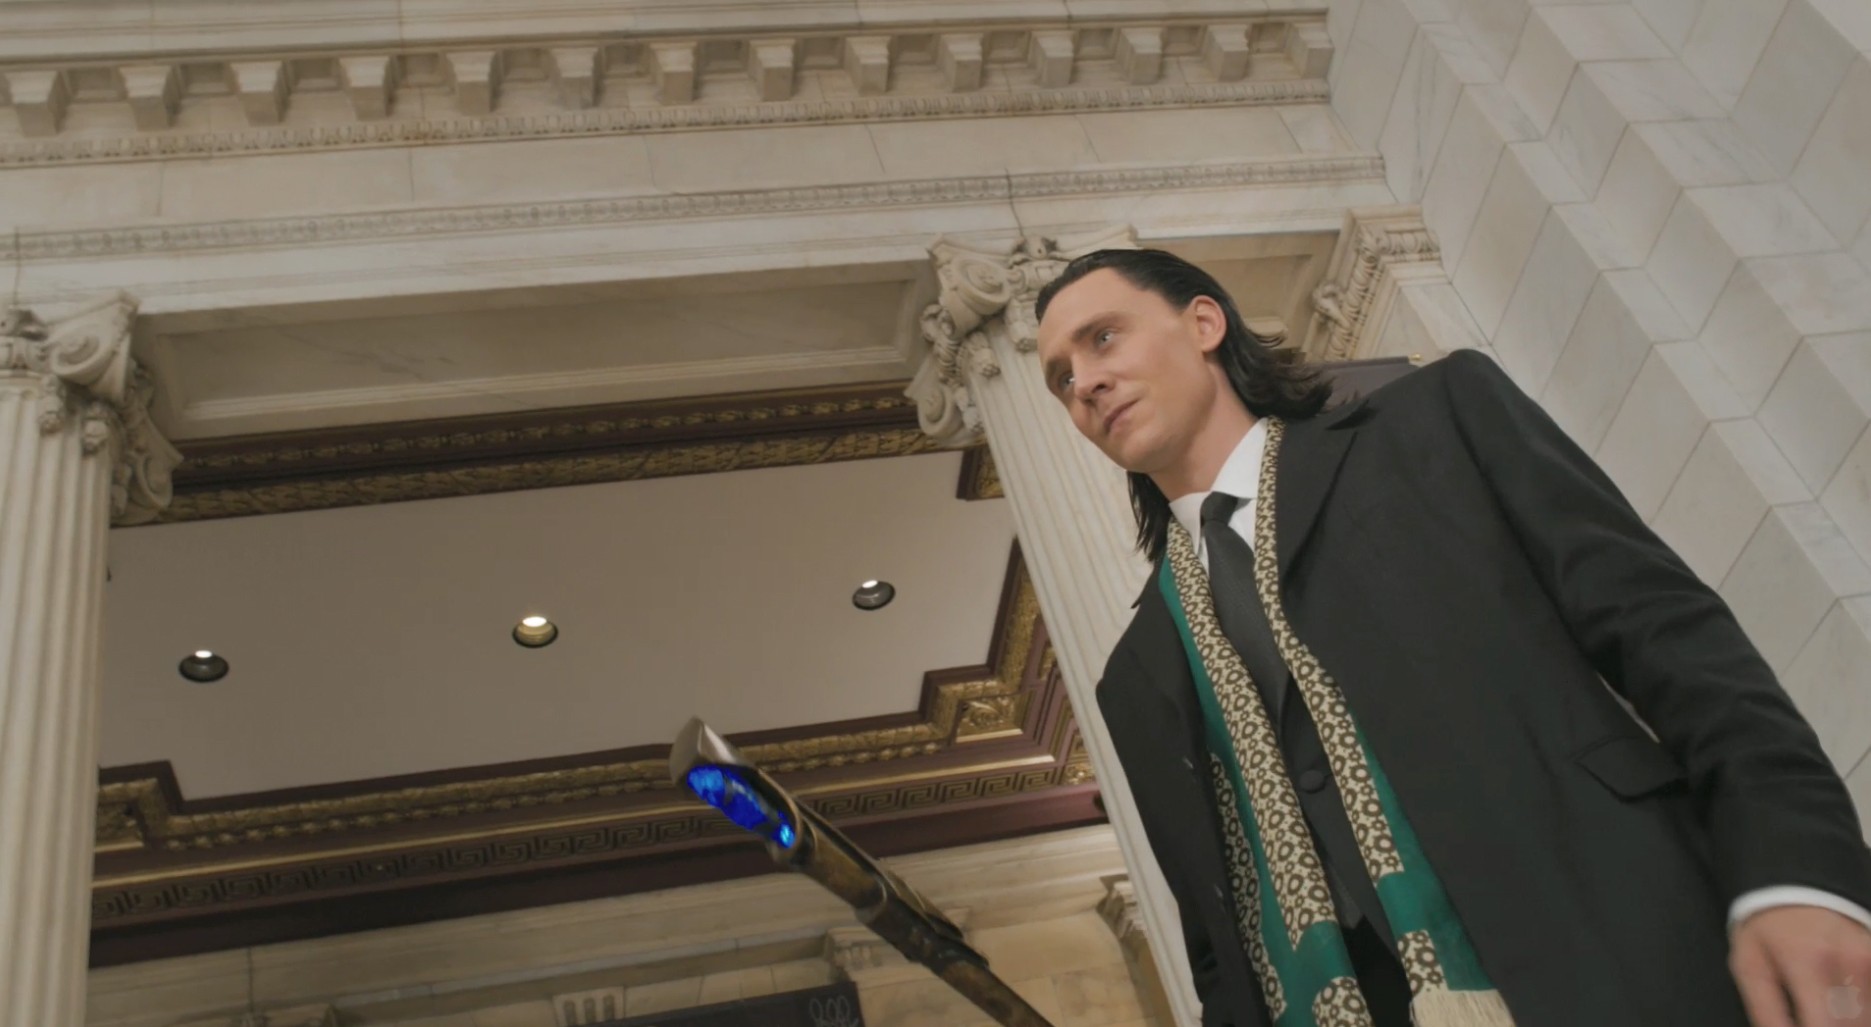 Tom Hiddleston stars as Loki in Walt Disney Pictures' The Avengers (2012)